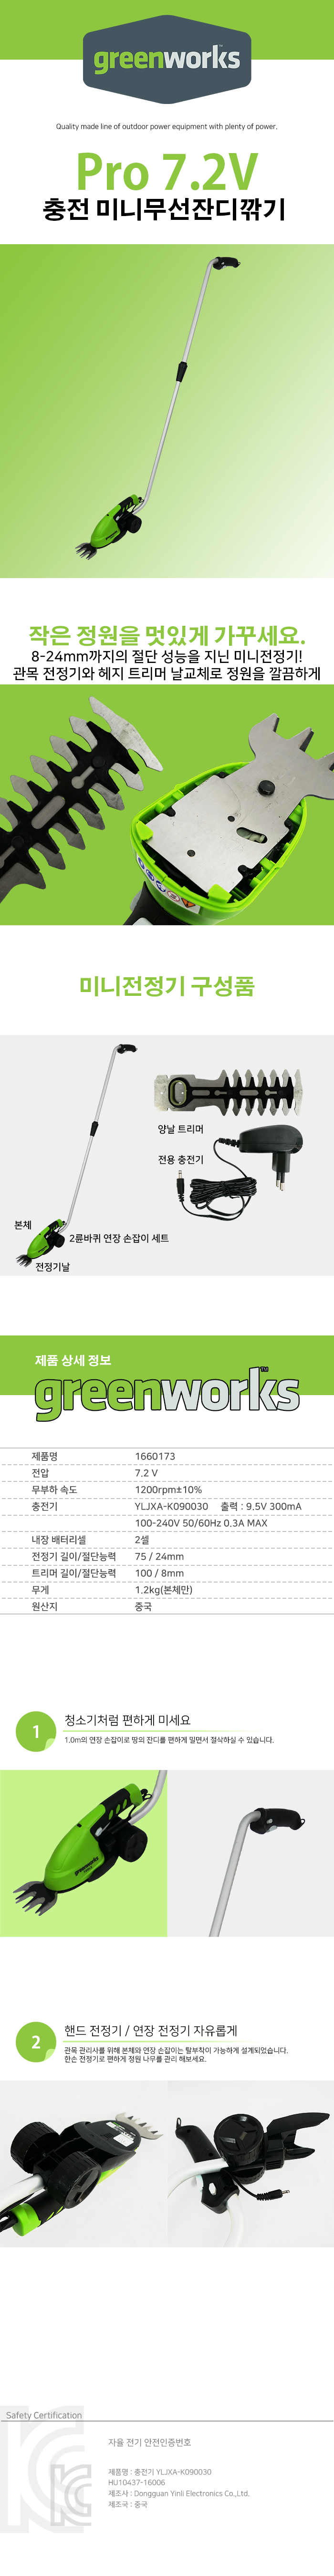 Shop_greenworks_1660173.jpg